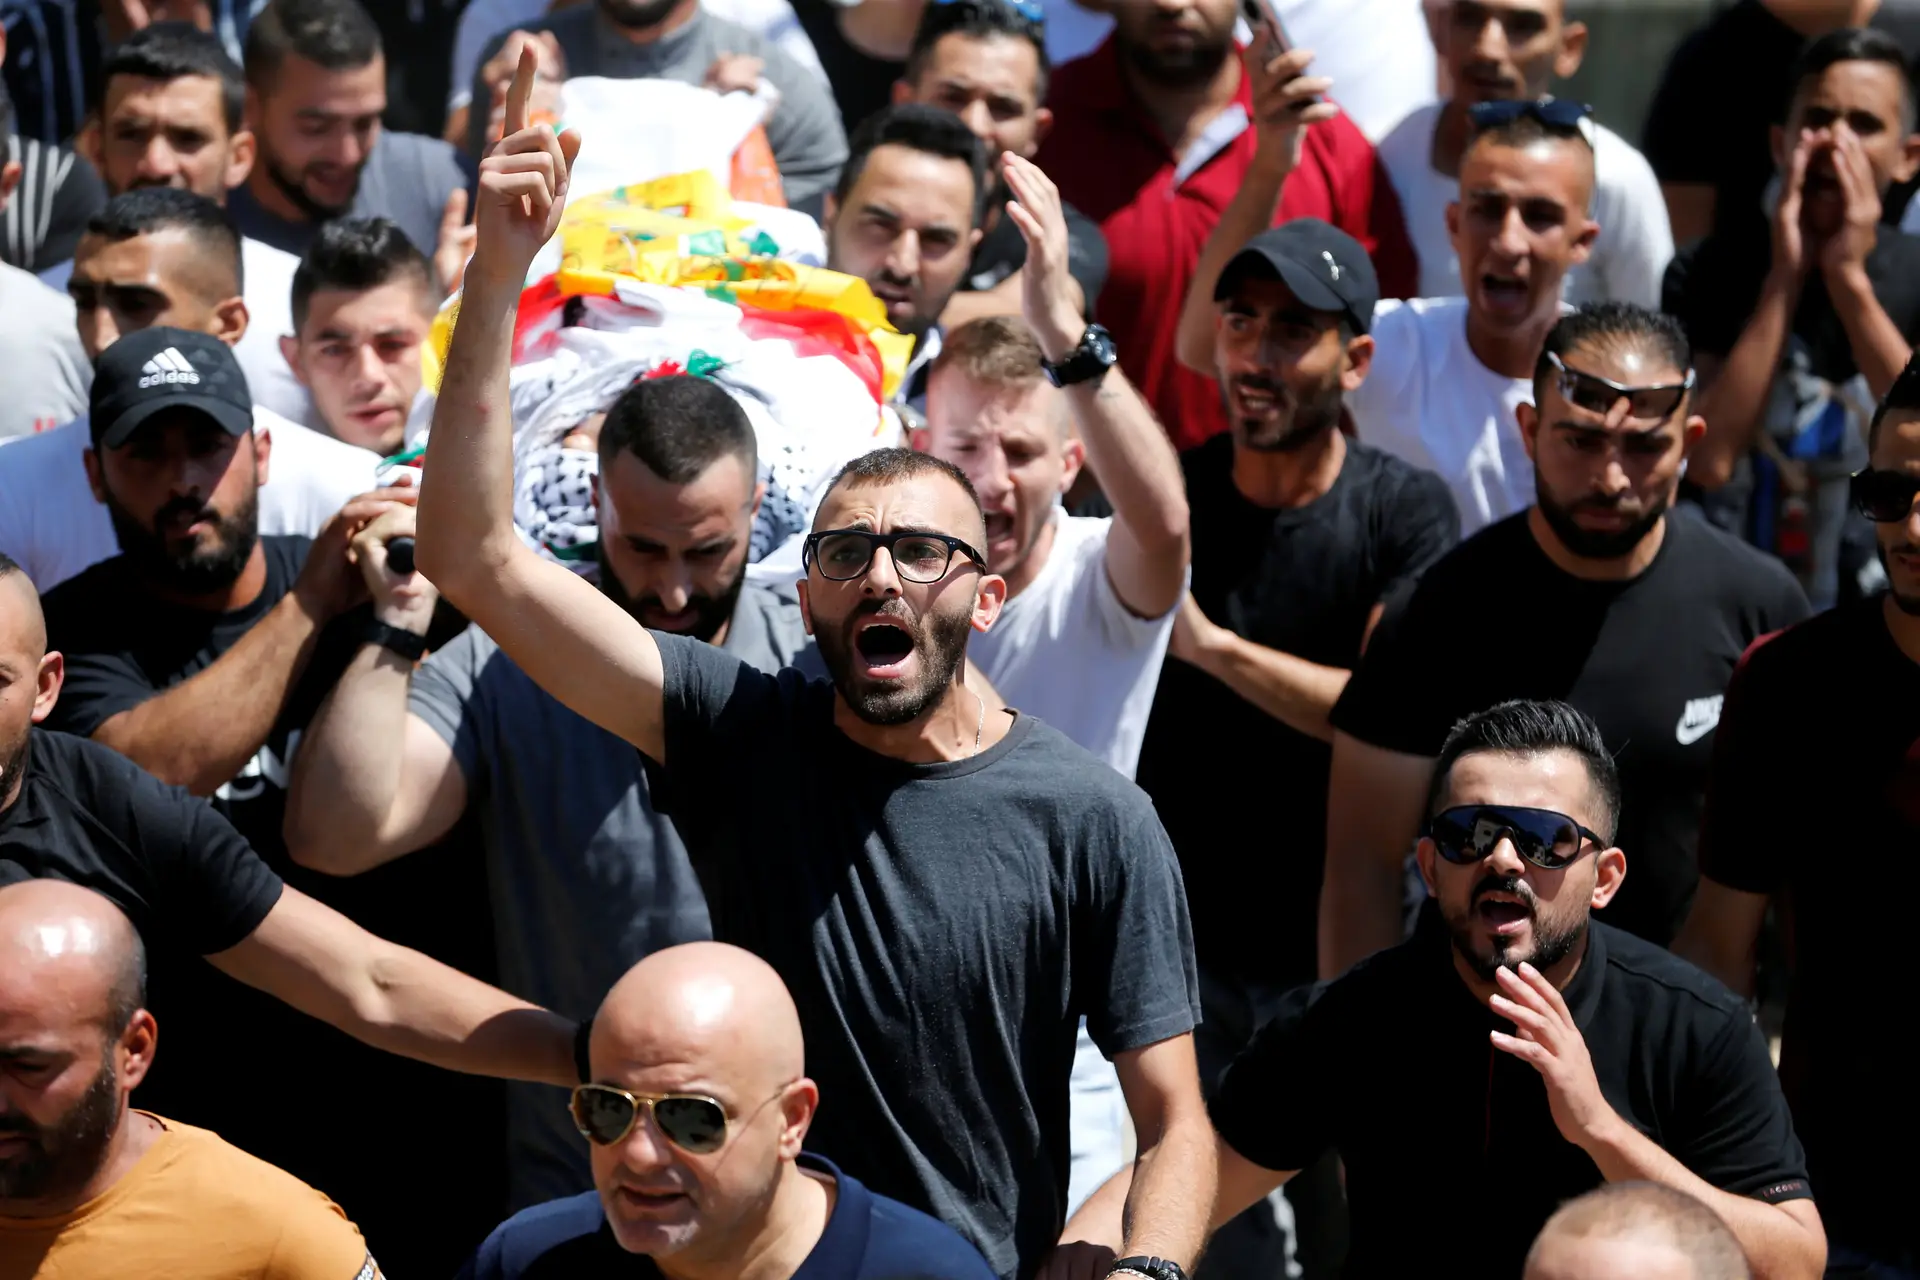 Palestiniano morto por disparos de tropas israelitas na Cisjordânia durante funeral de adolescente